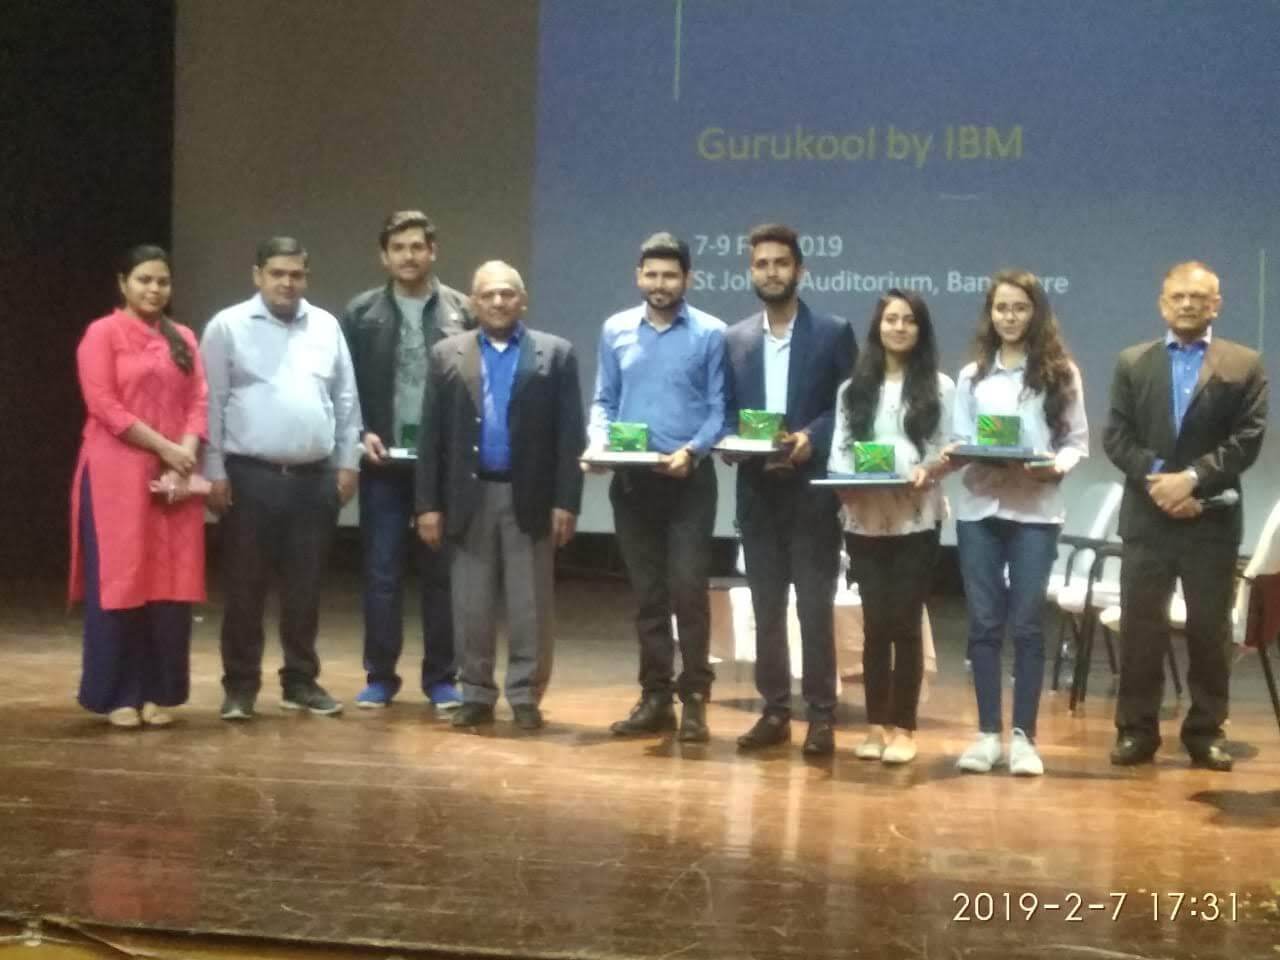 Ritwik Joshi and team winning award at IBM Gurukool